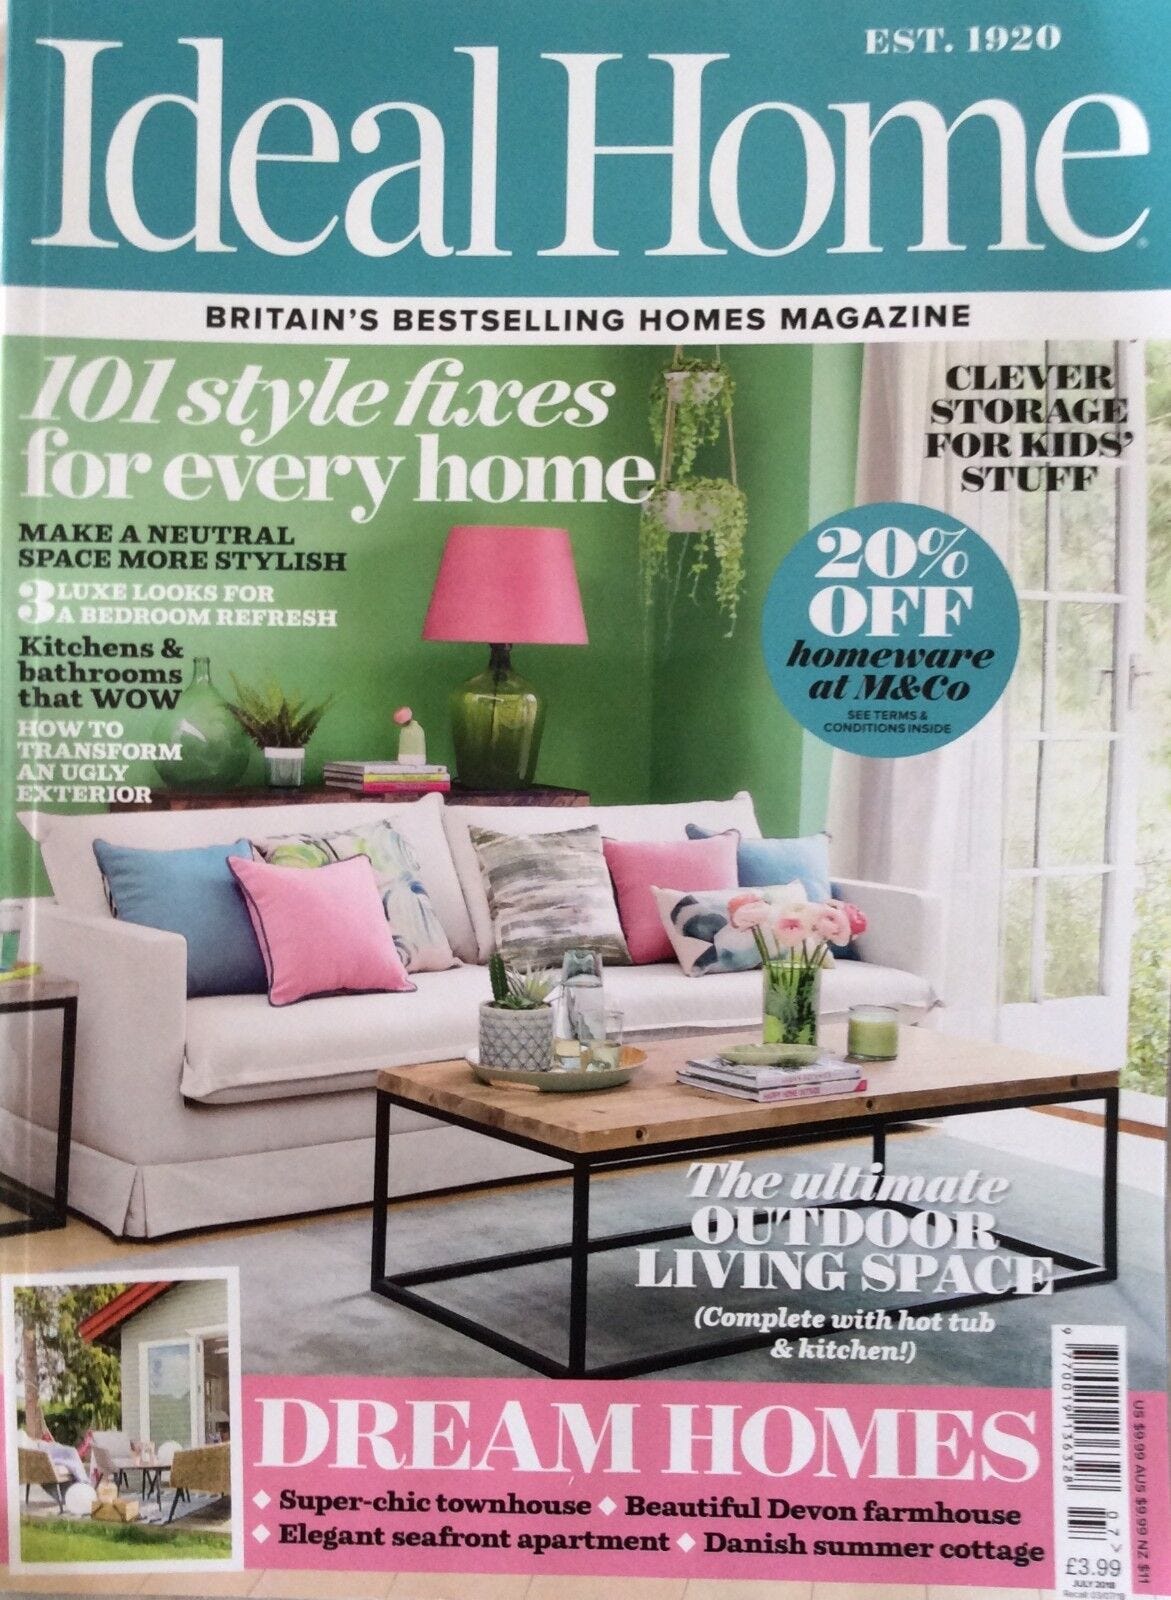 Ideal Home Magazine September 2018 Edition for sale online | eBay